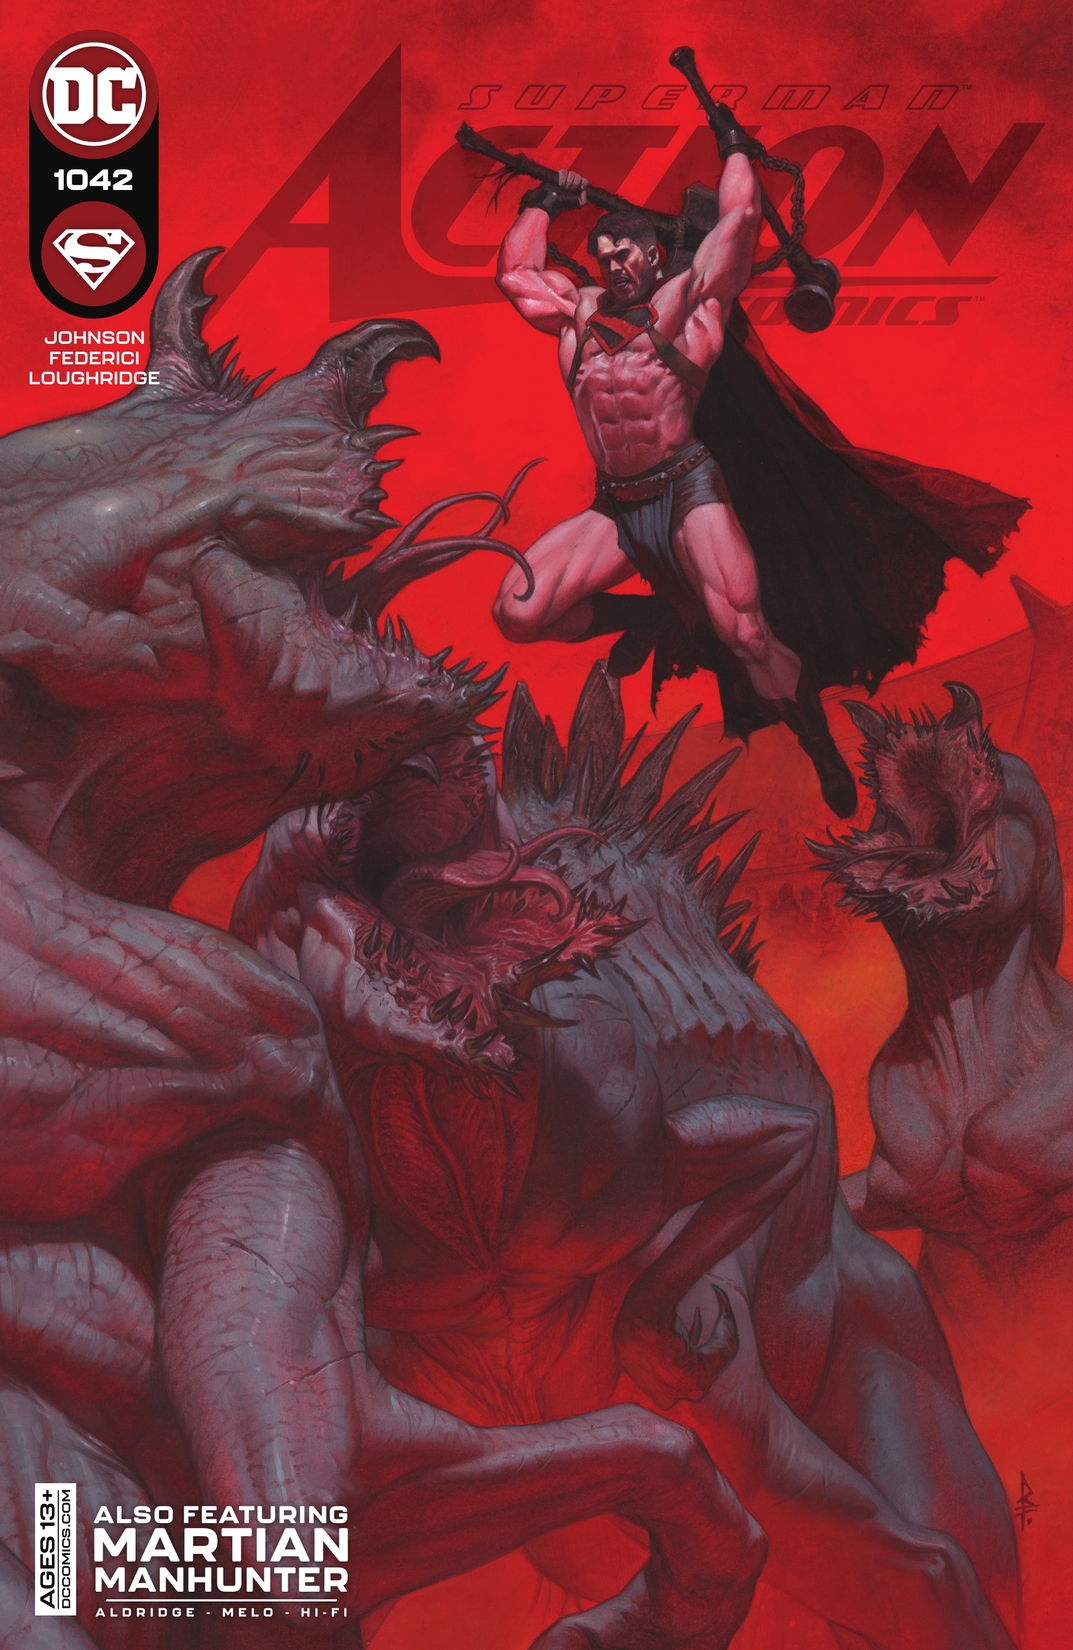 Action Comics (2016-) #1042 preview images